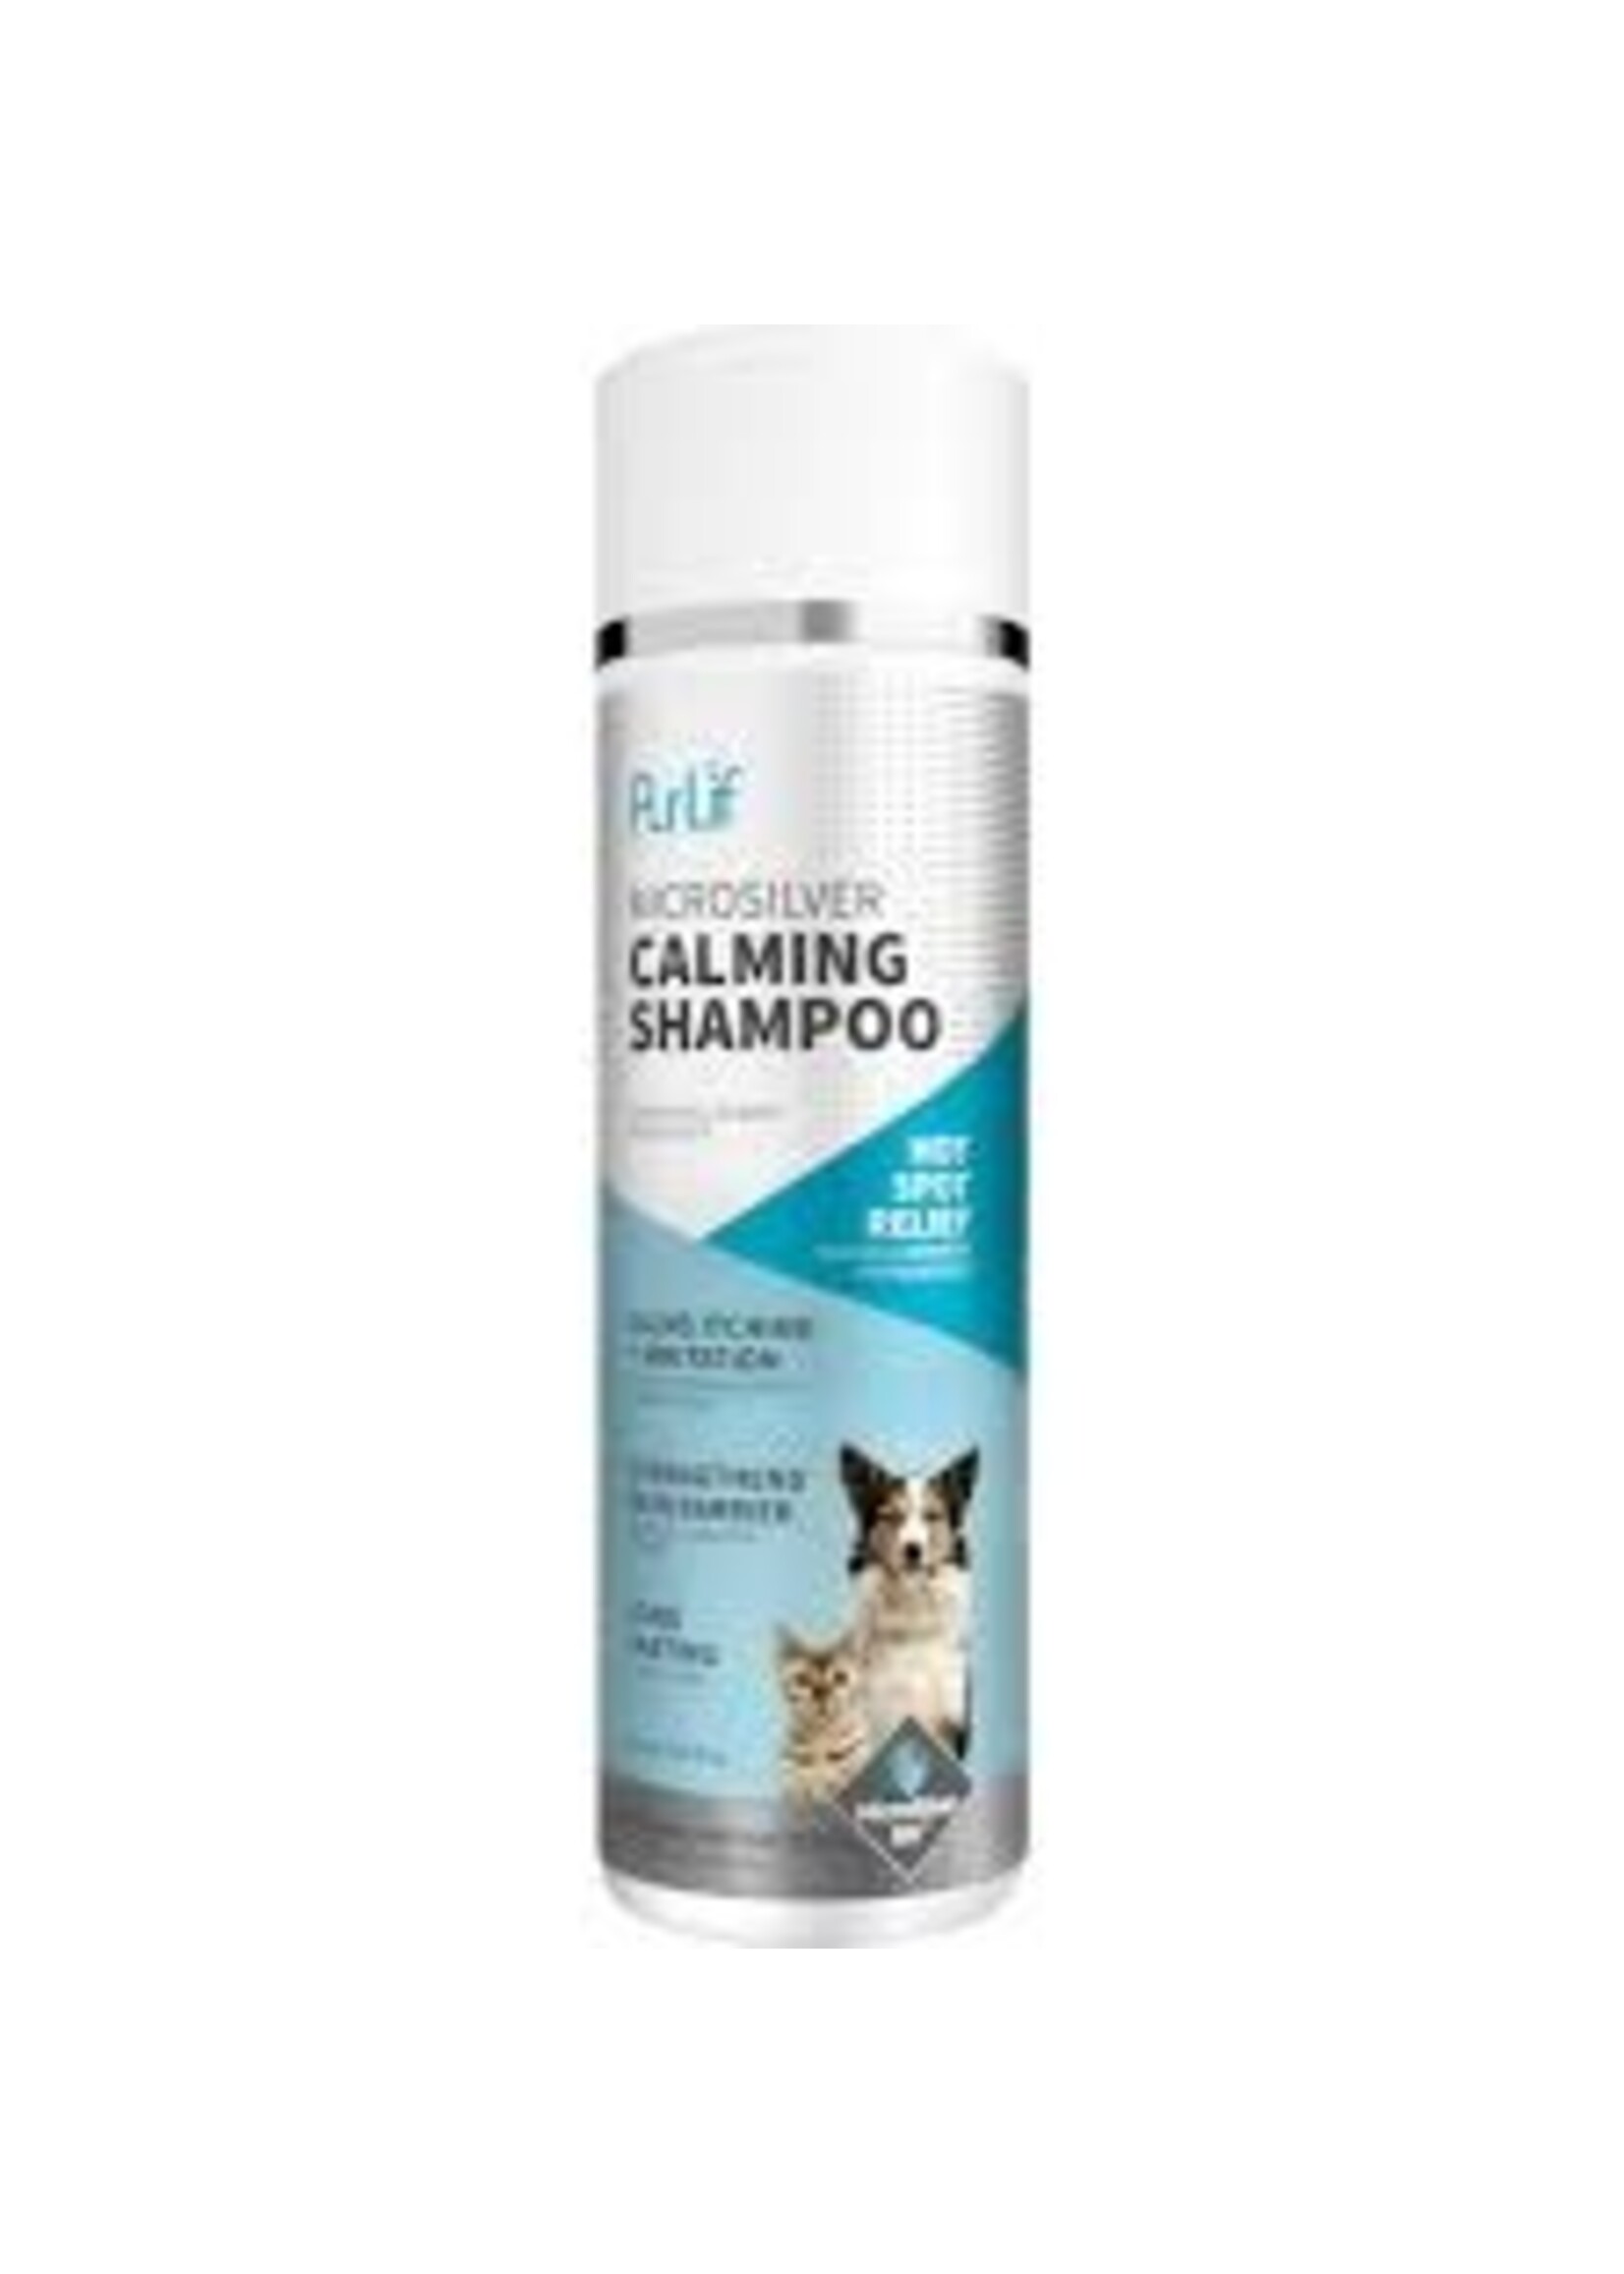 PurLif Calming Shampoo 200 ml